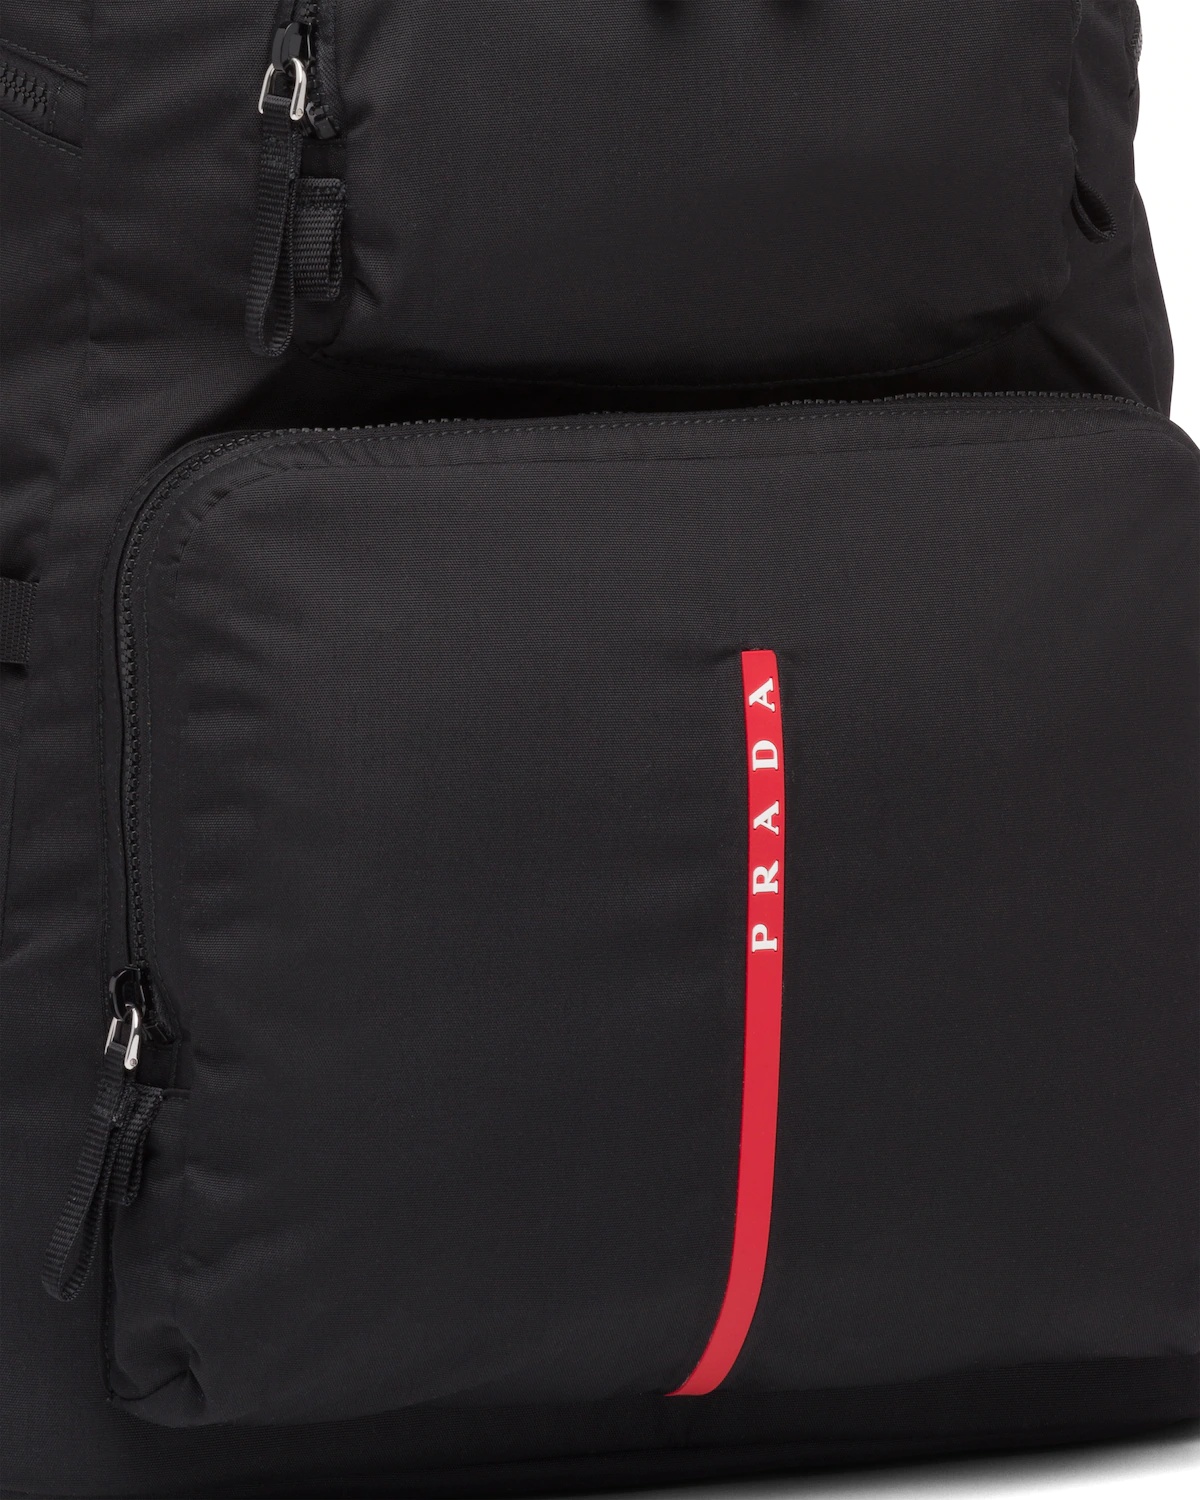 Technical fabric ski boot backpack - 6